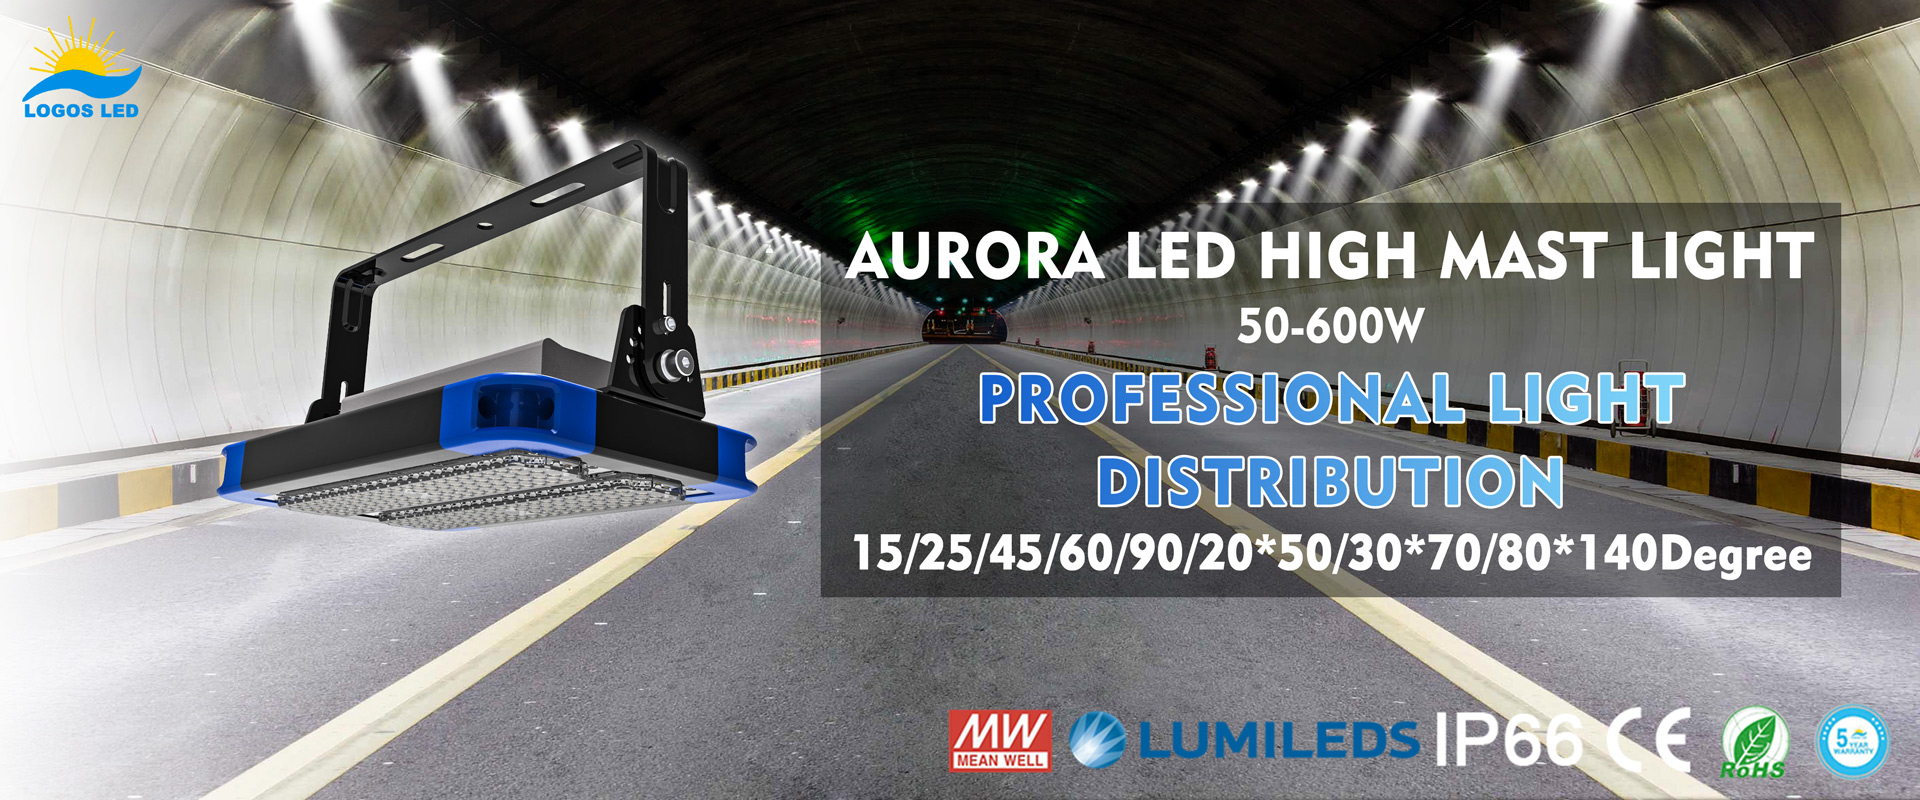 Aurora LED High Mast Light